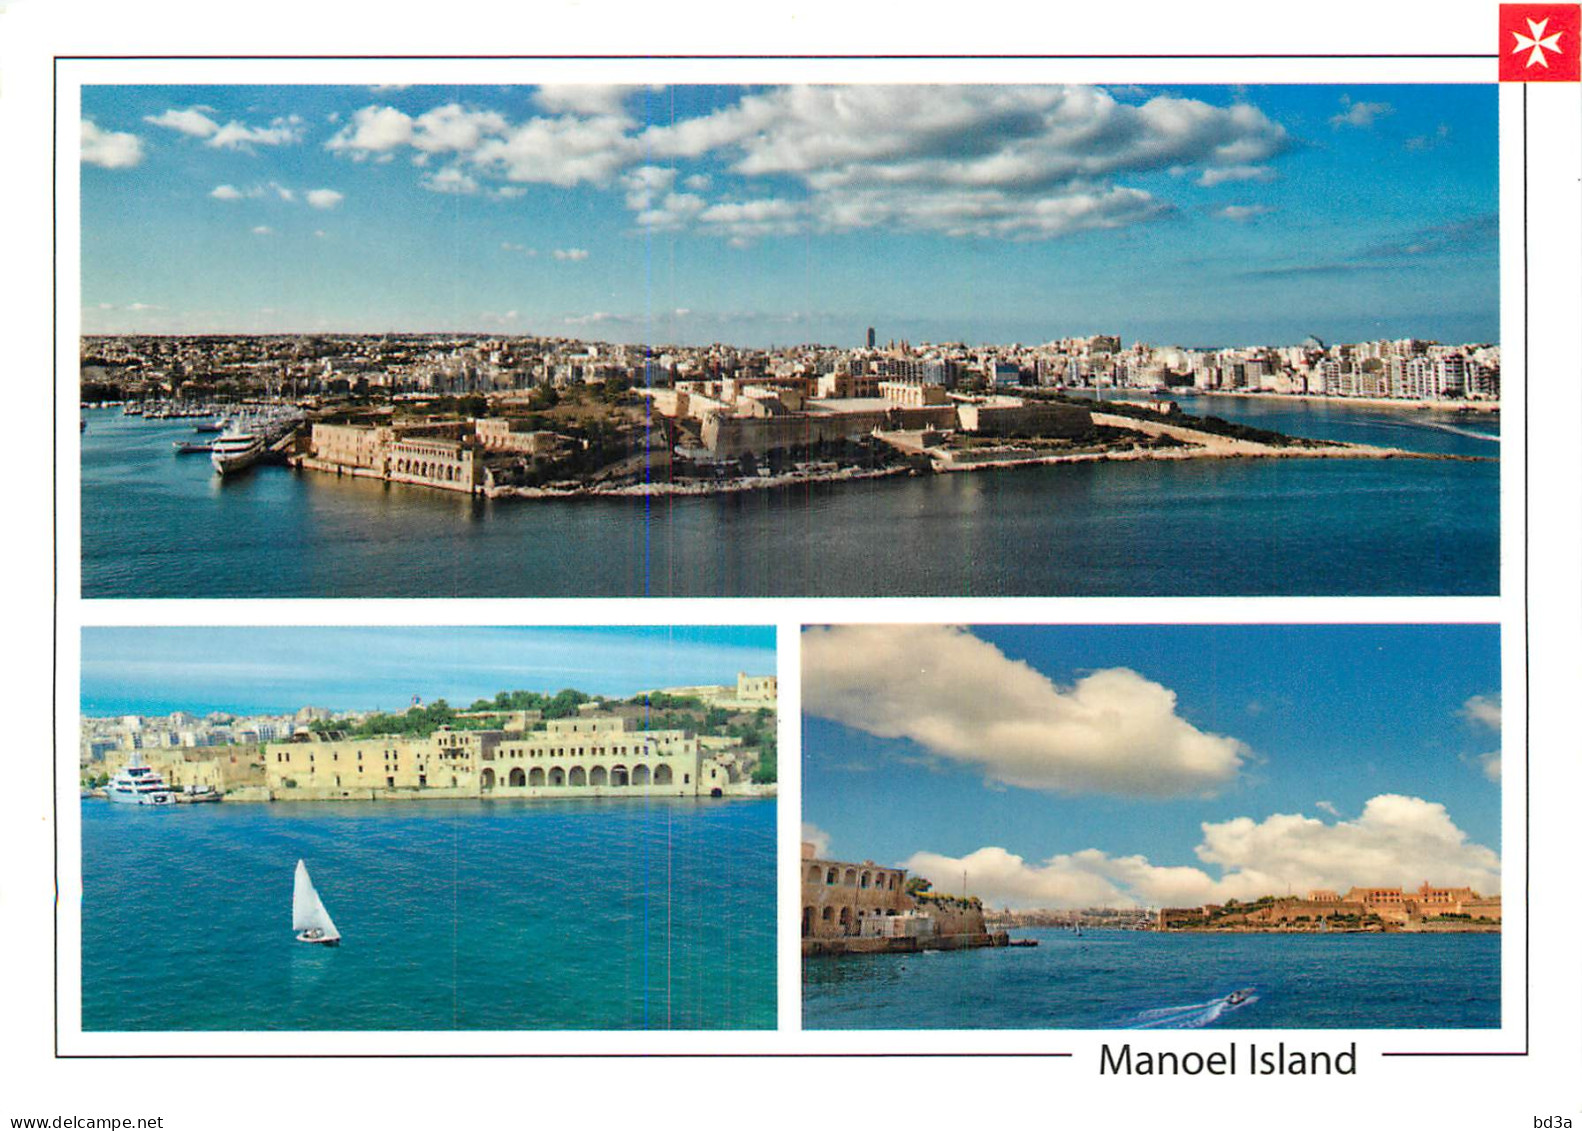  MALTE  MALTA  MANOEL ISLAND - Malte